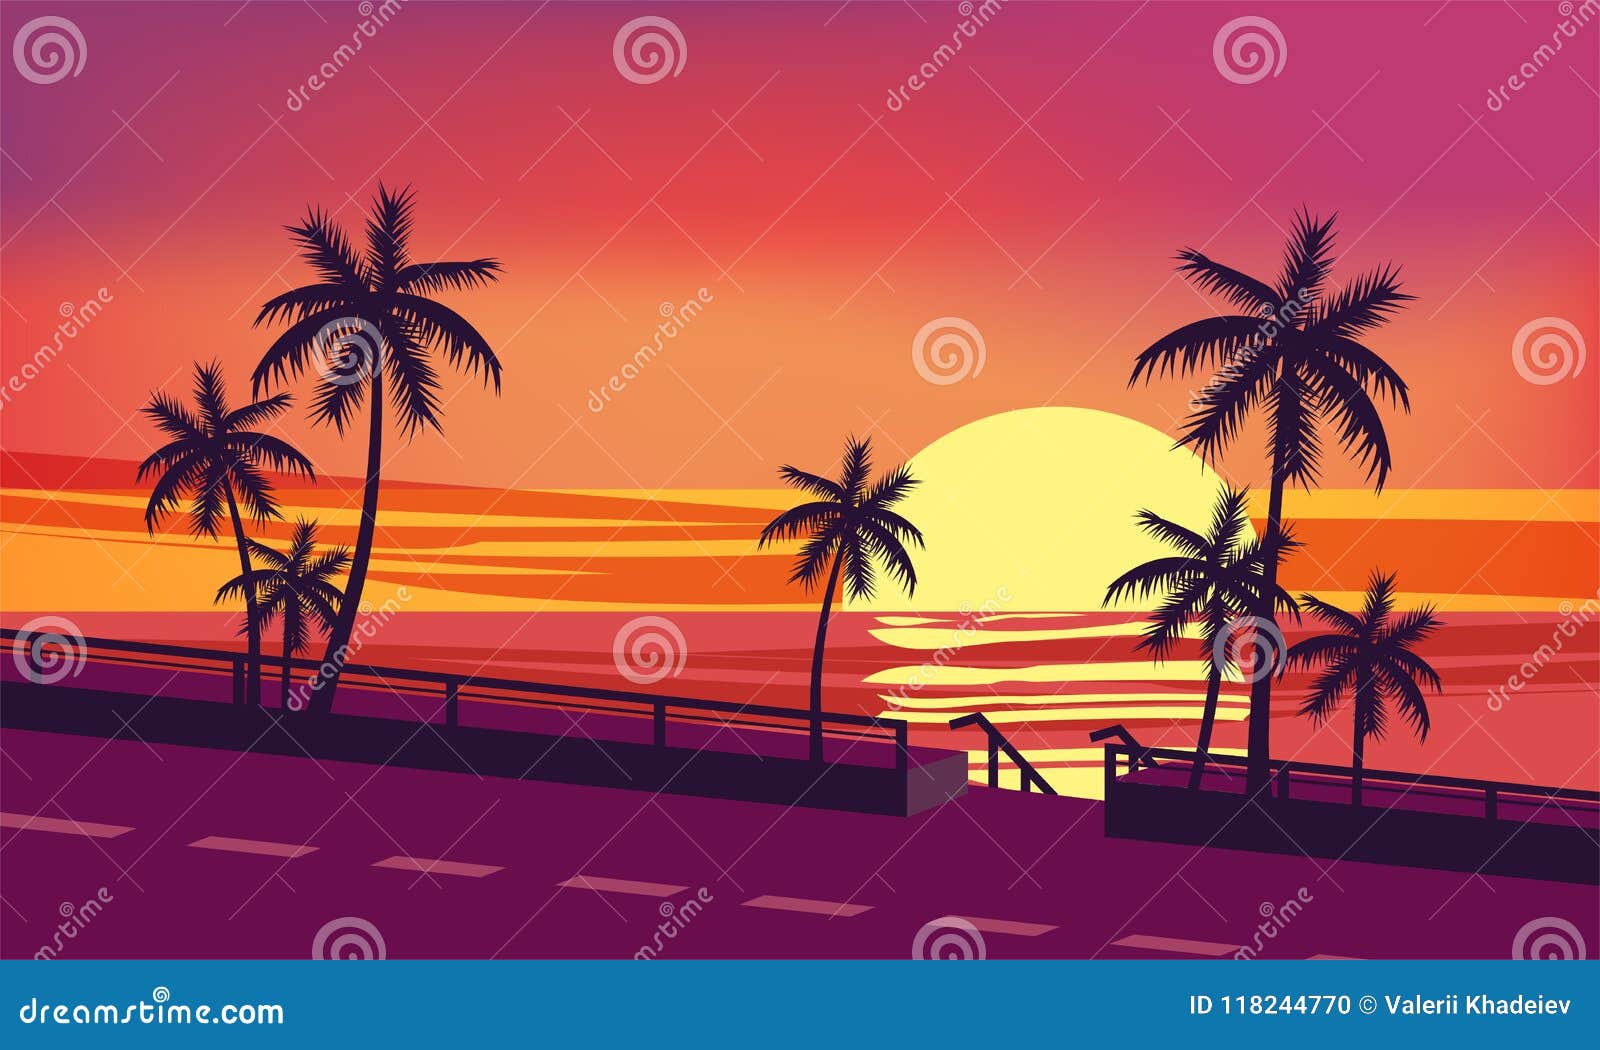 Sunset, Ocean, Evening, Palm Trees Sea Shore, Vector, Illustration ...